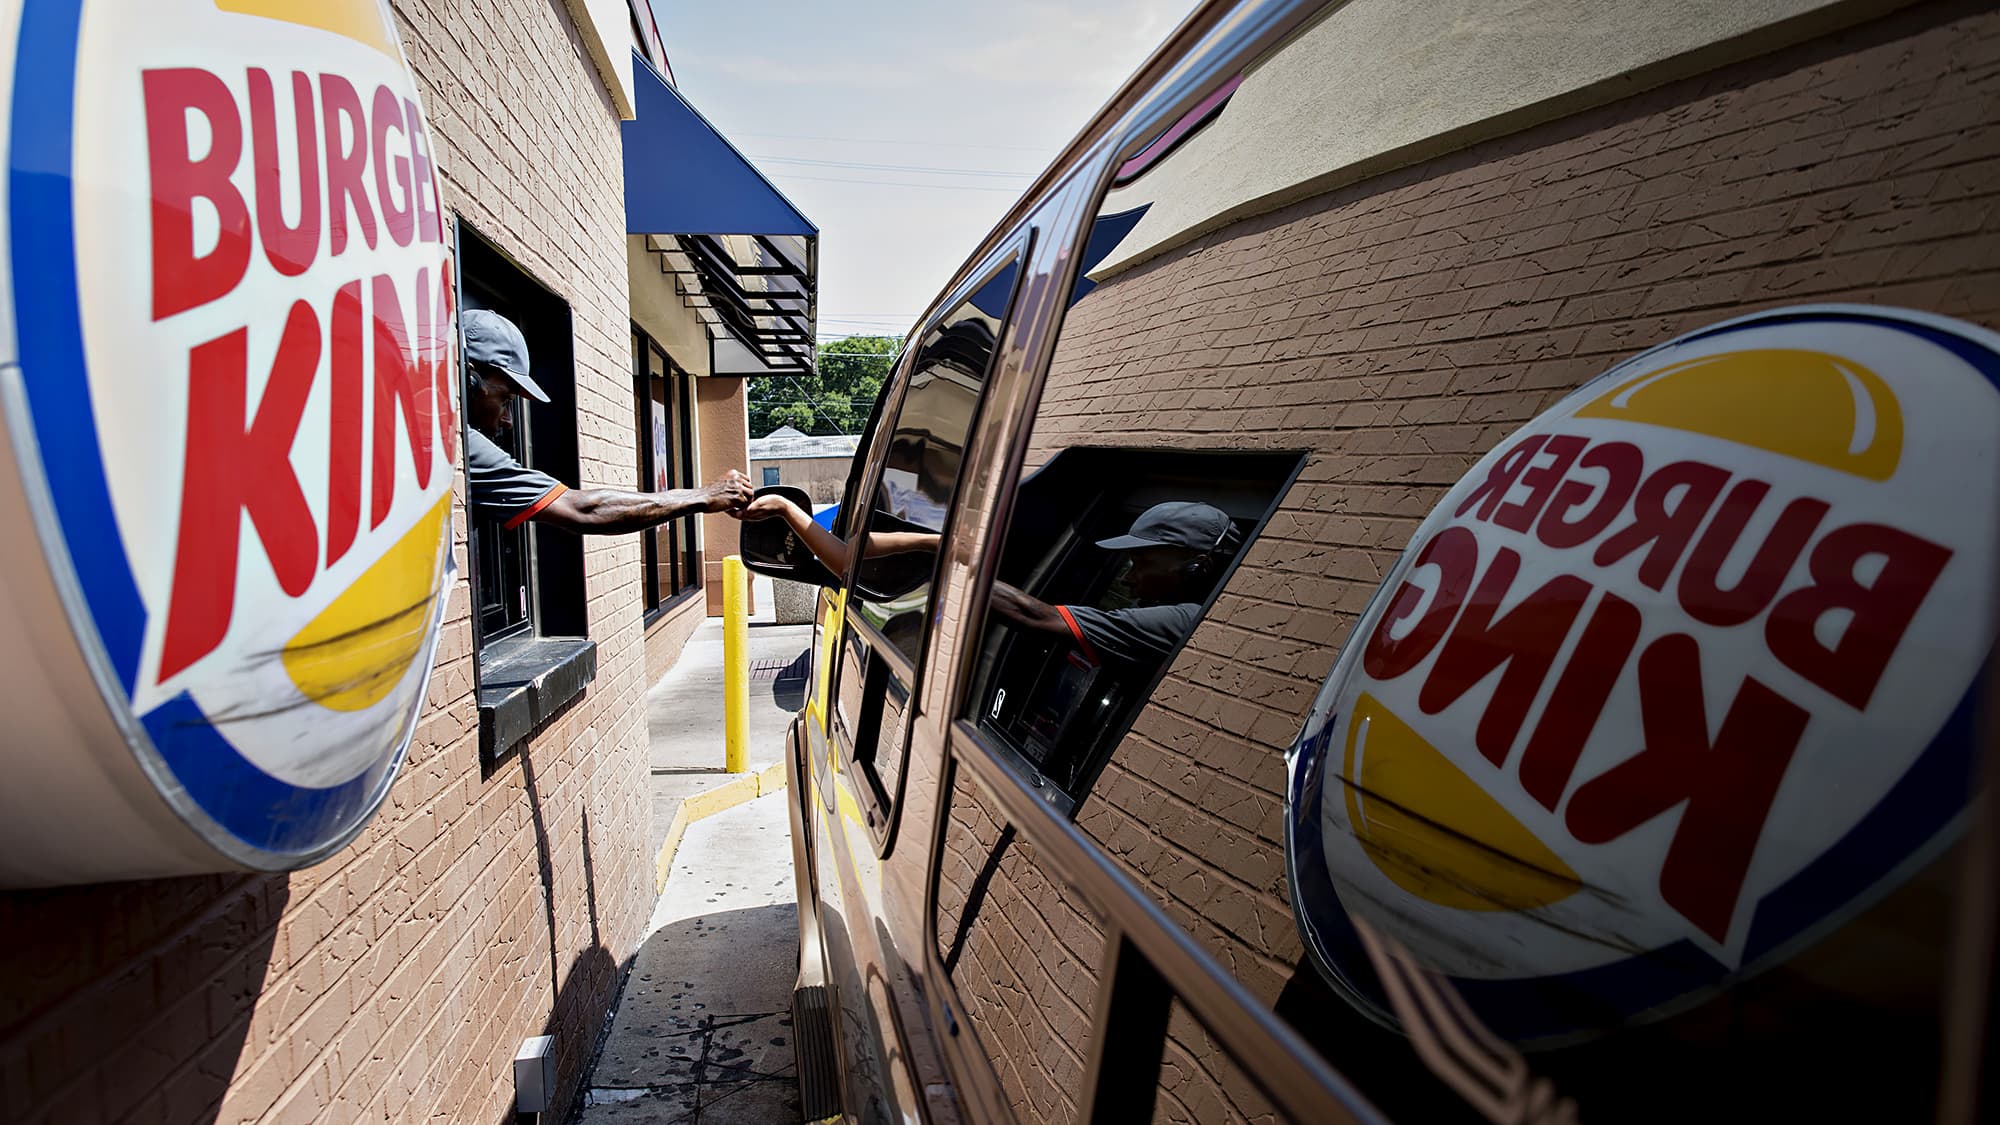 Burger King will cut menu items to speed up its drive-thru lanes